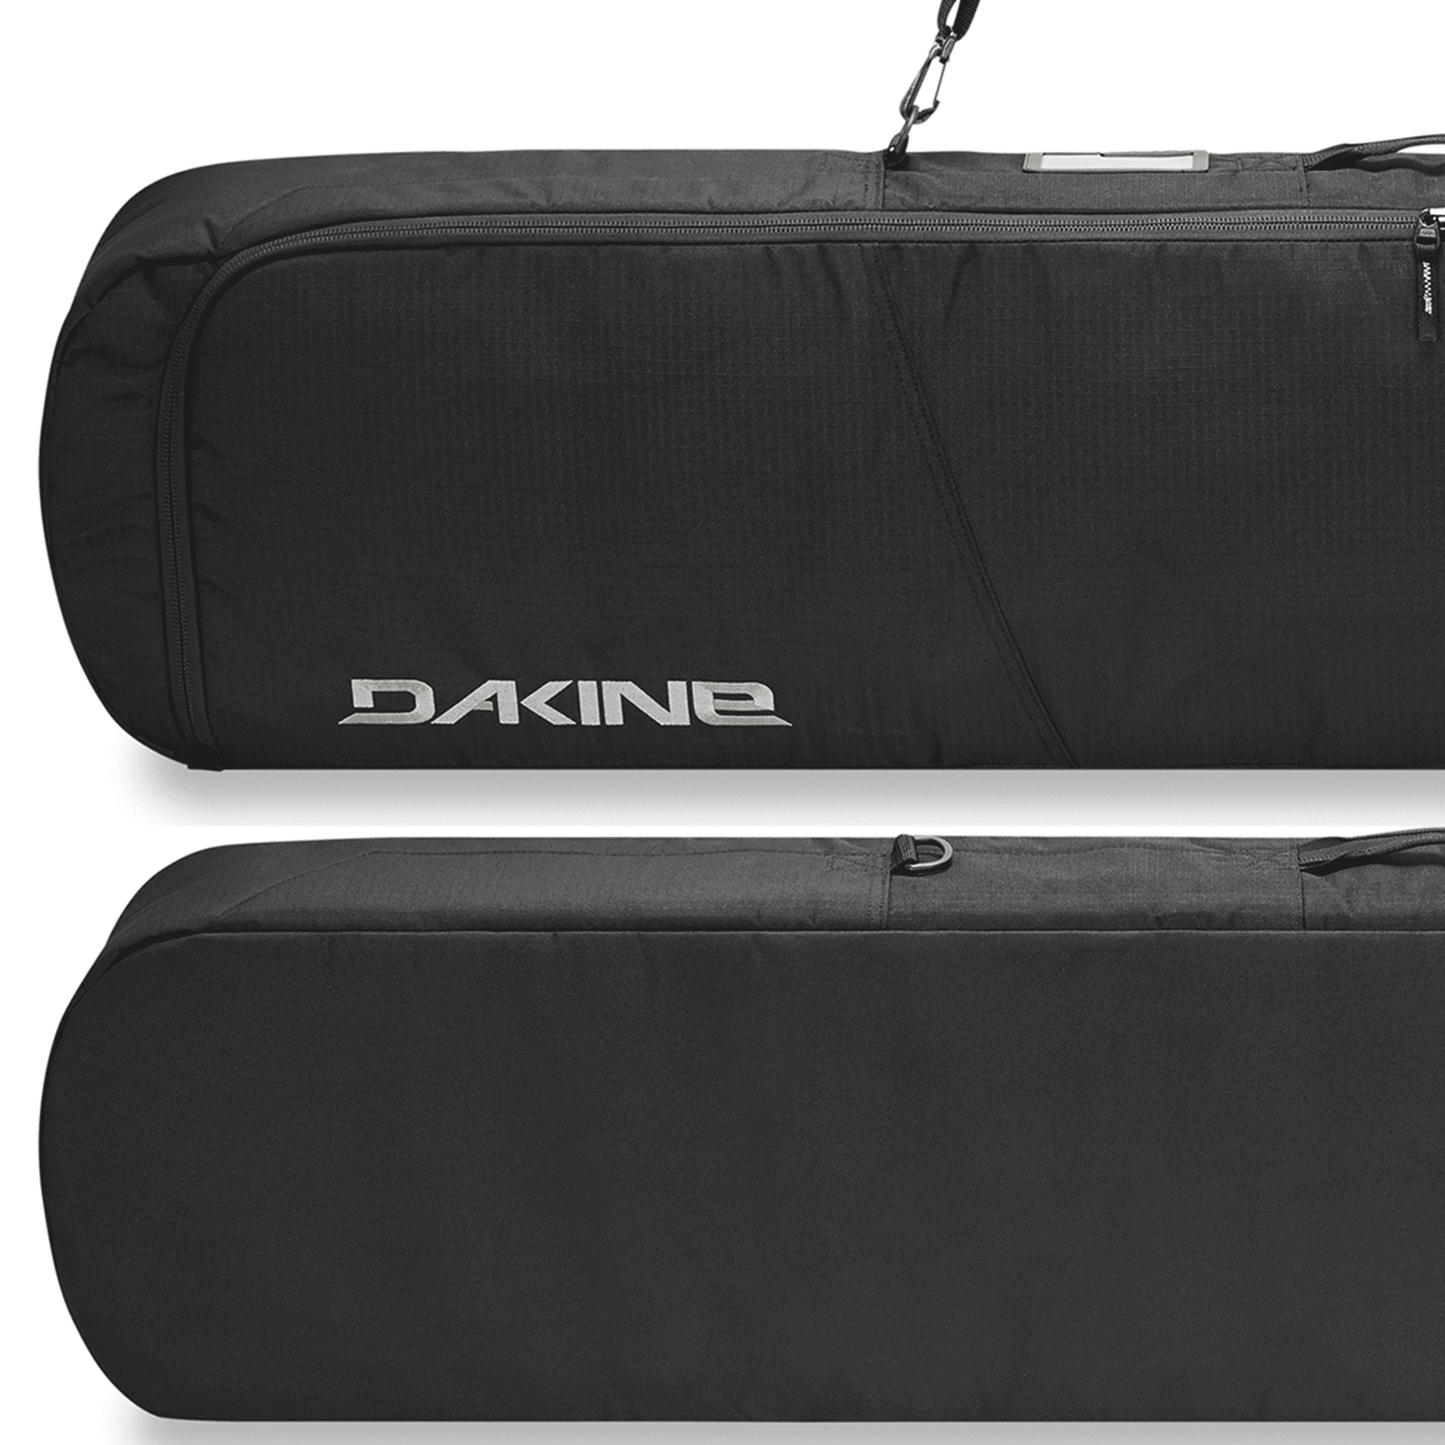 Dakine Tour Snowboard Bag - Black